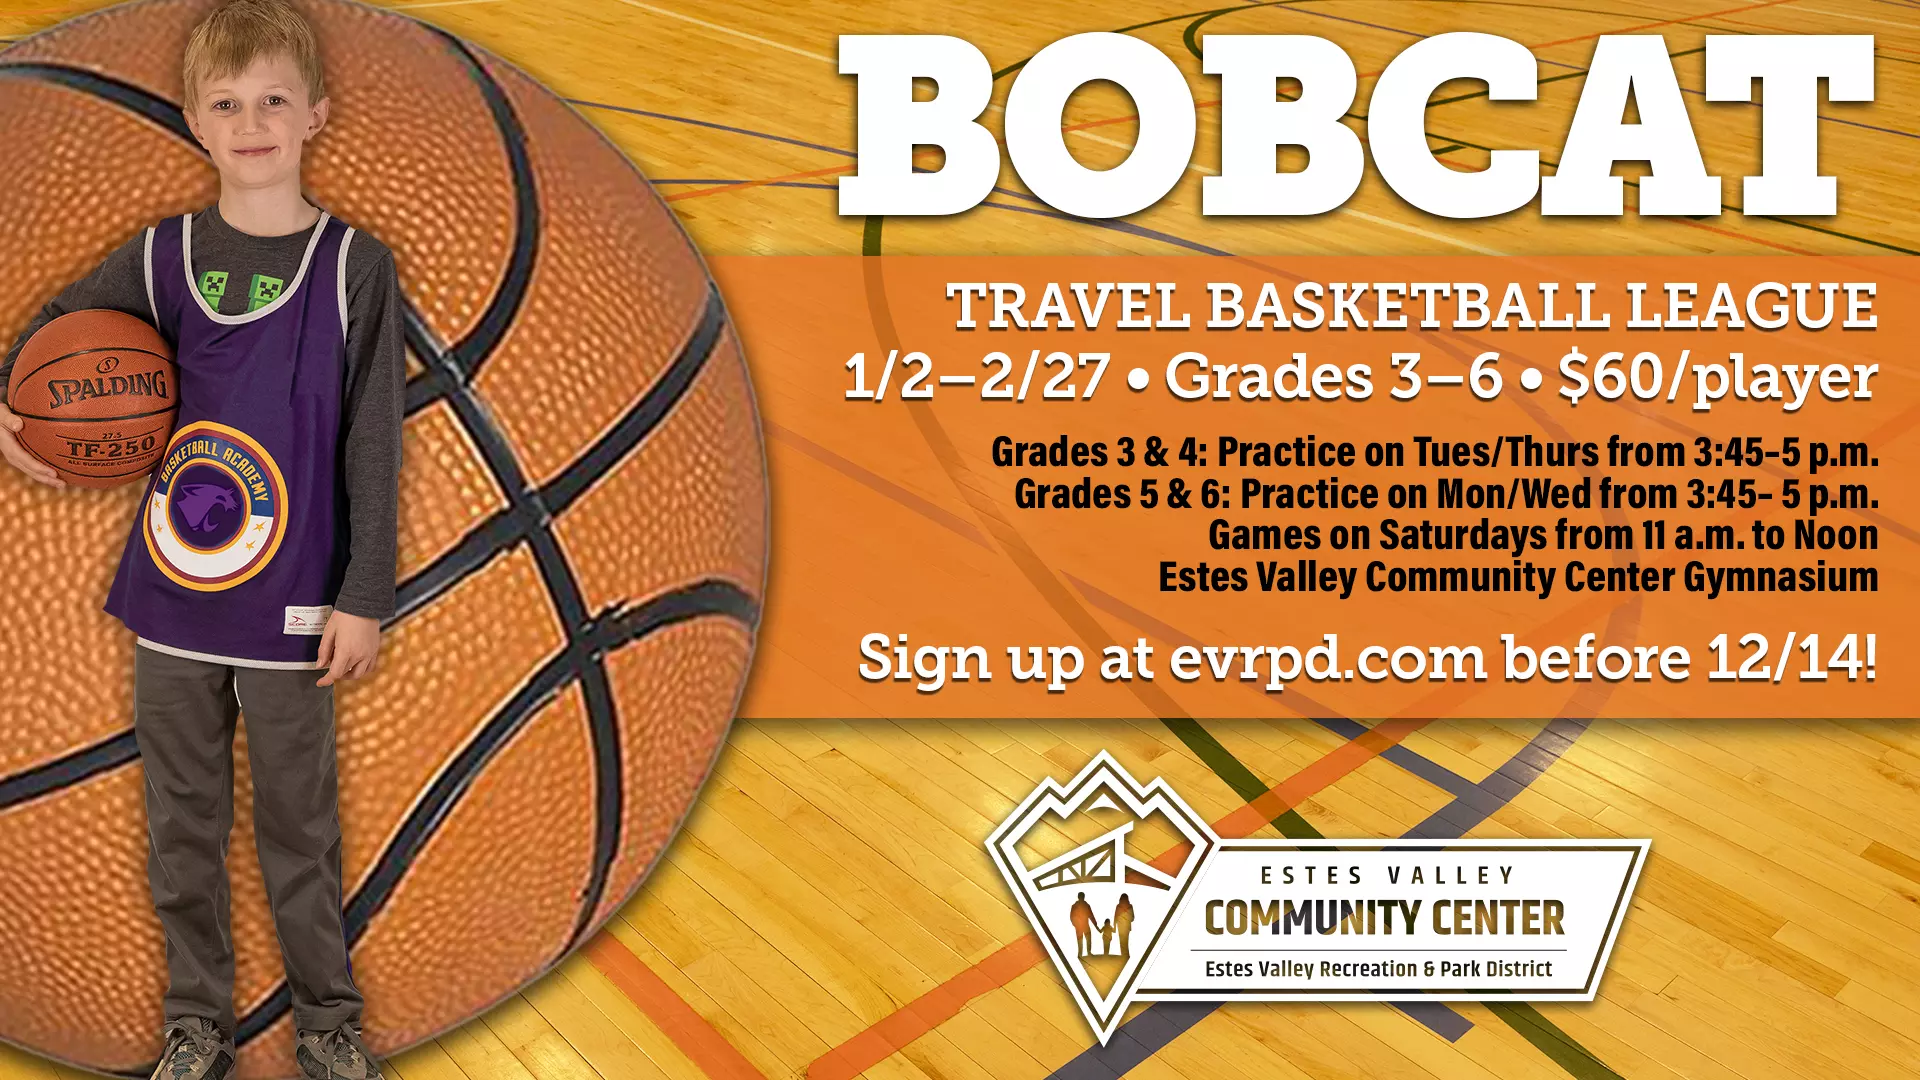 Travel Basketball for grades 3-6